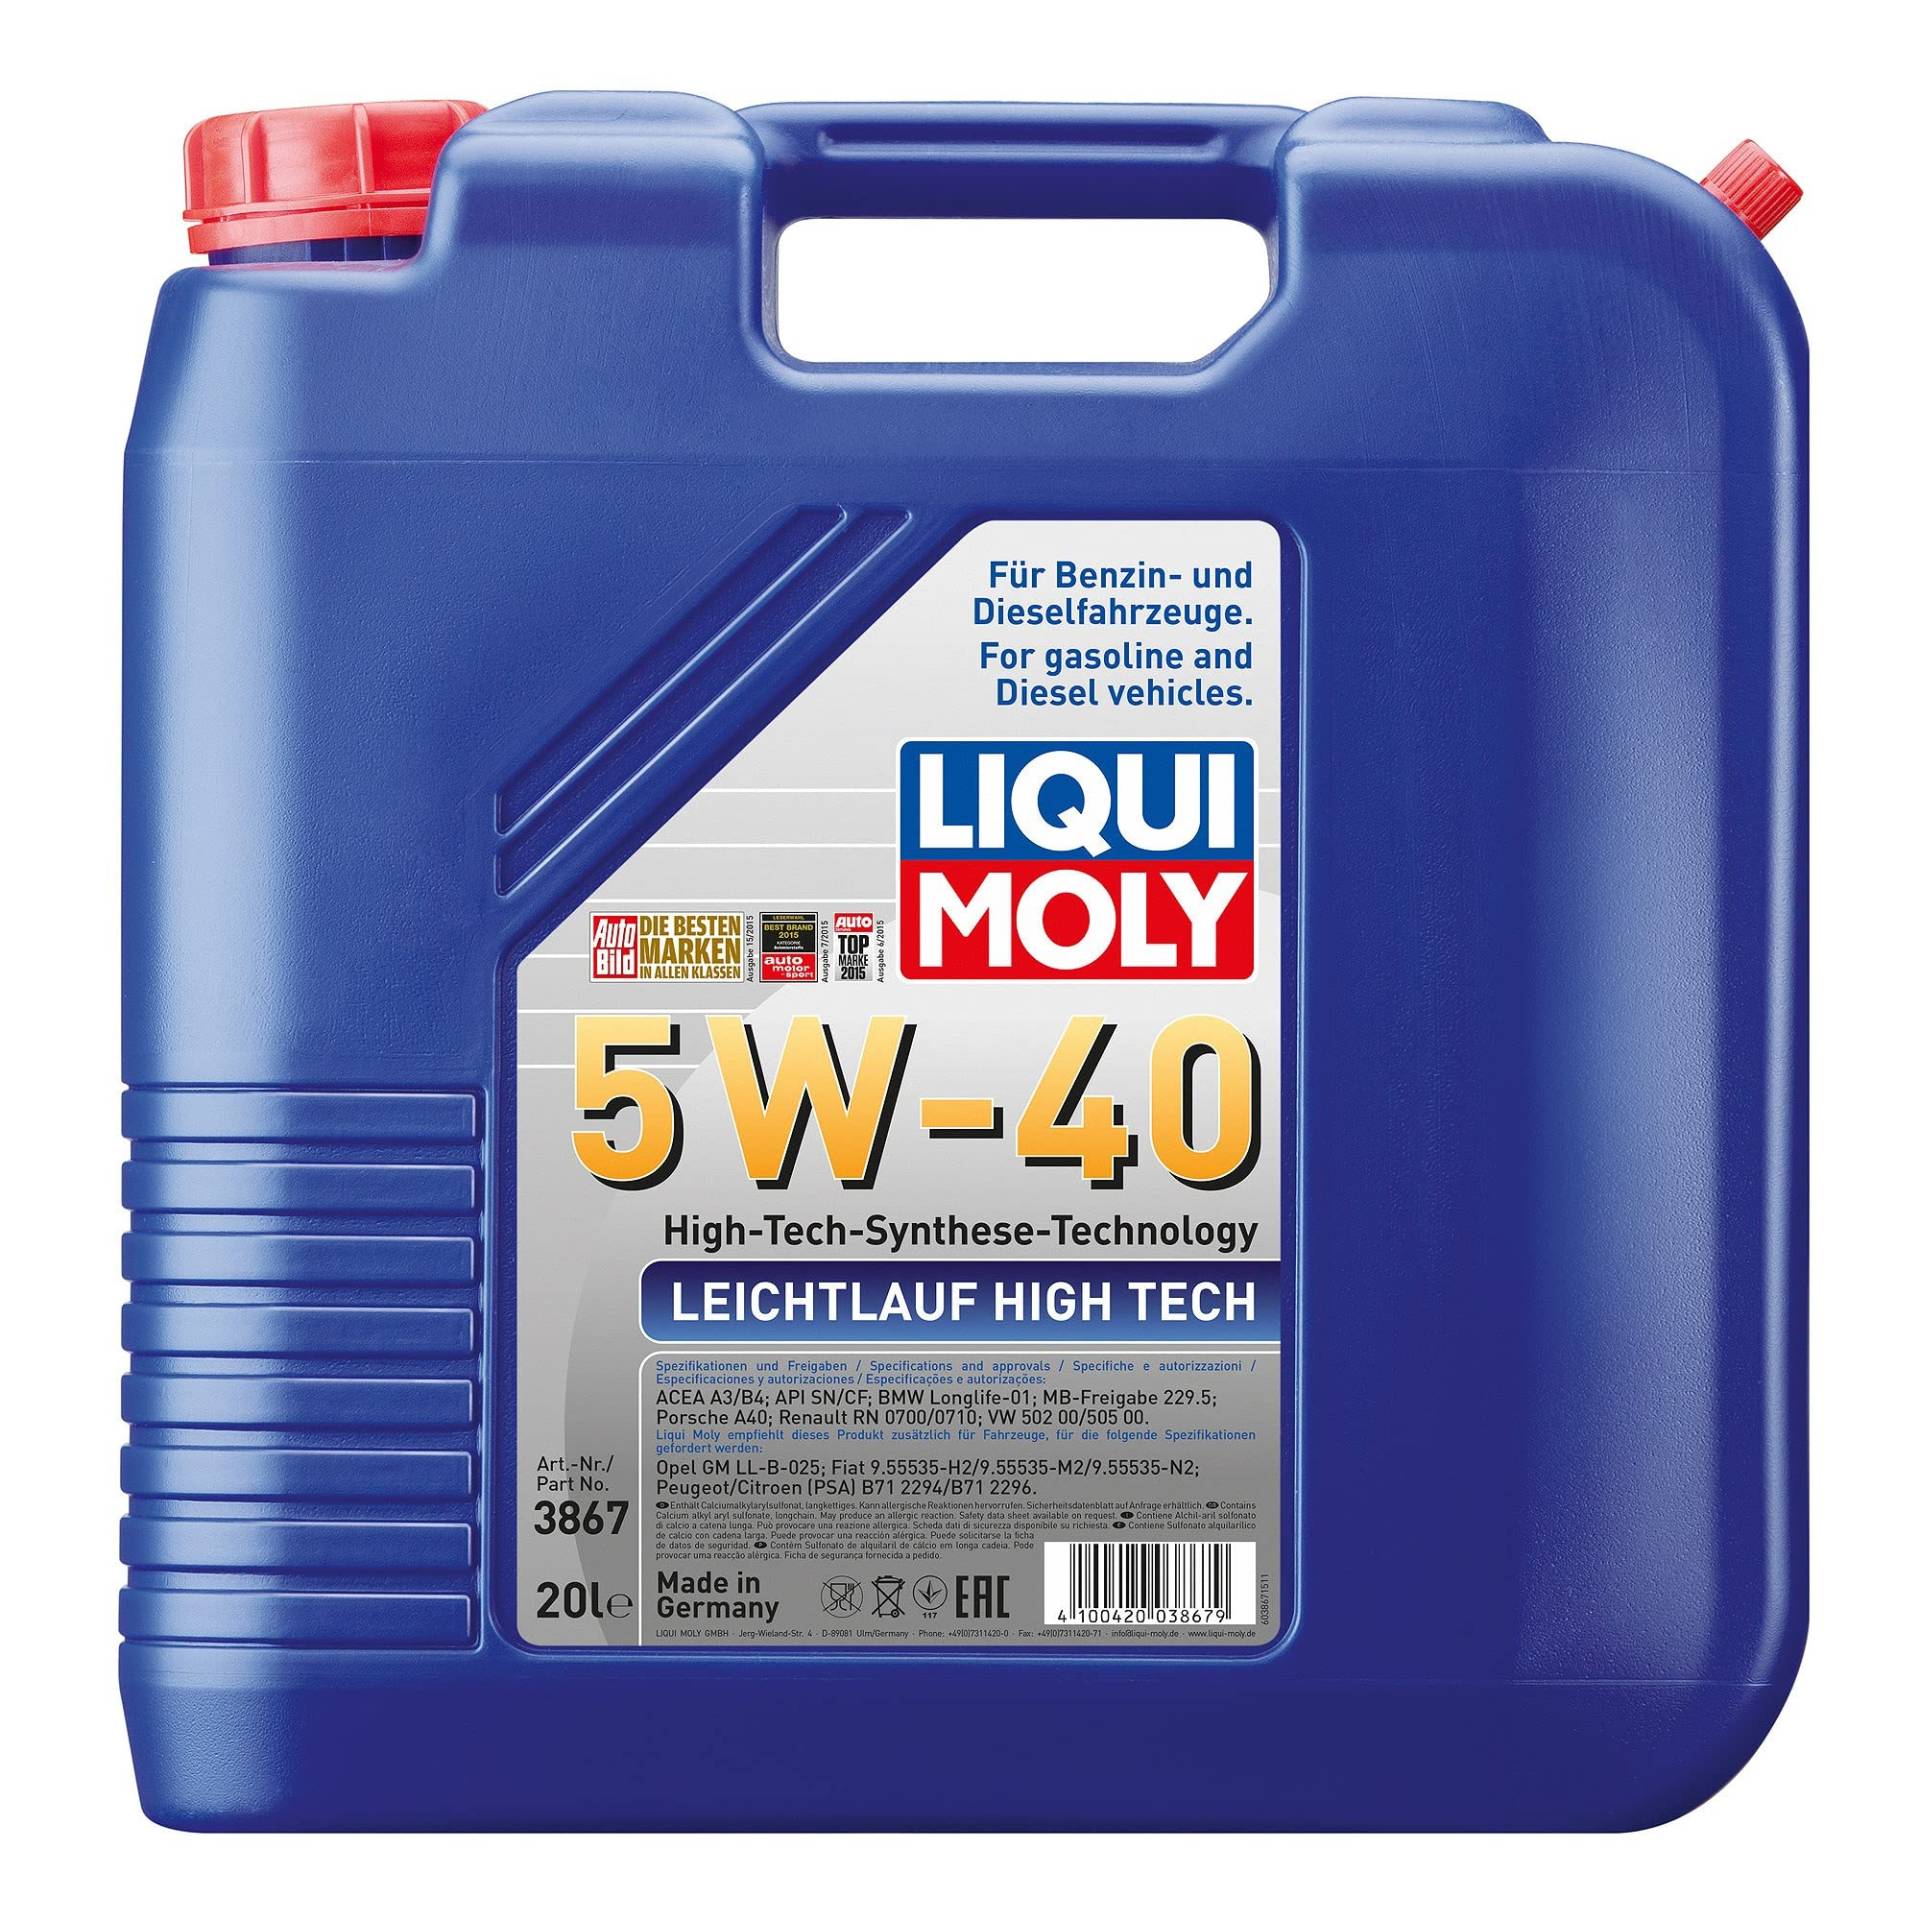 LIQUI MOLY Leichtlauf High Tech 5W-40 | 20 L | Synthesetechnologie Motoröl | Art.-Nr.: 3867 von Liqui Moly